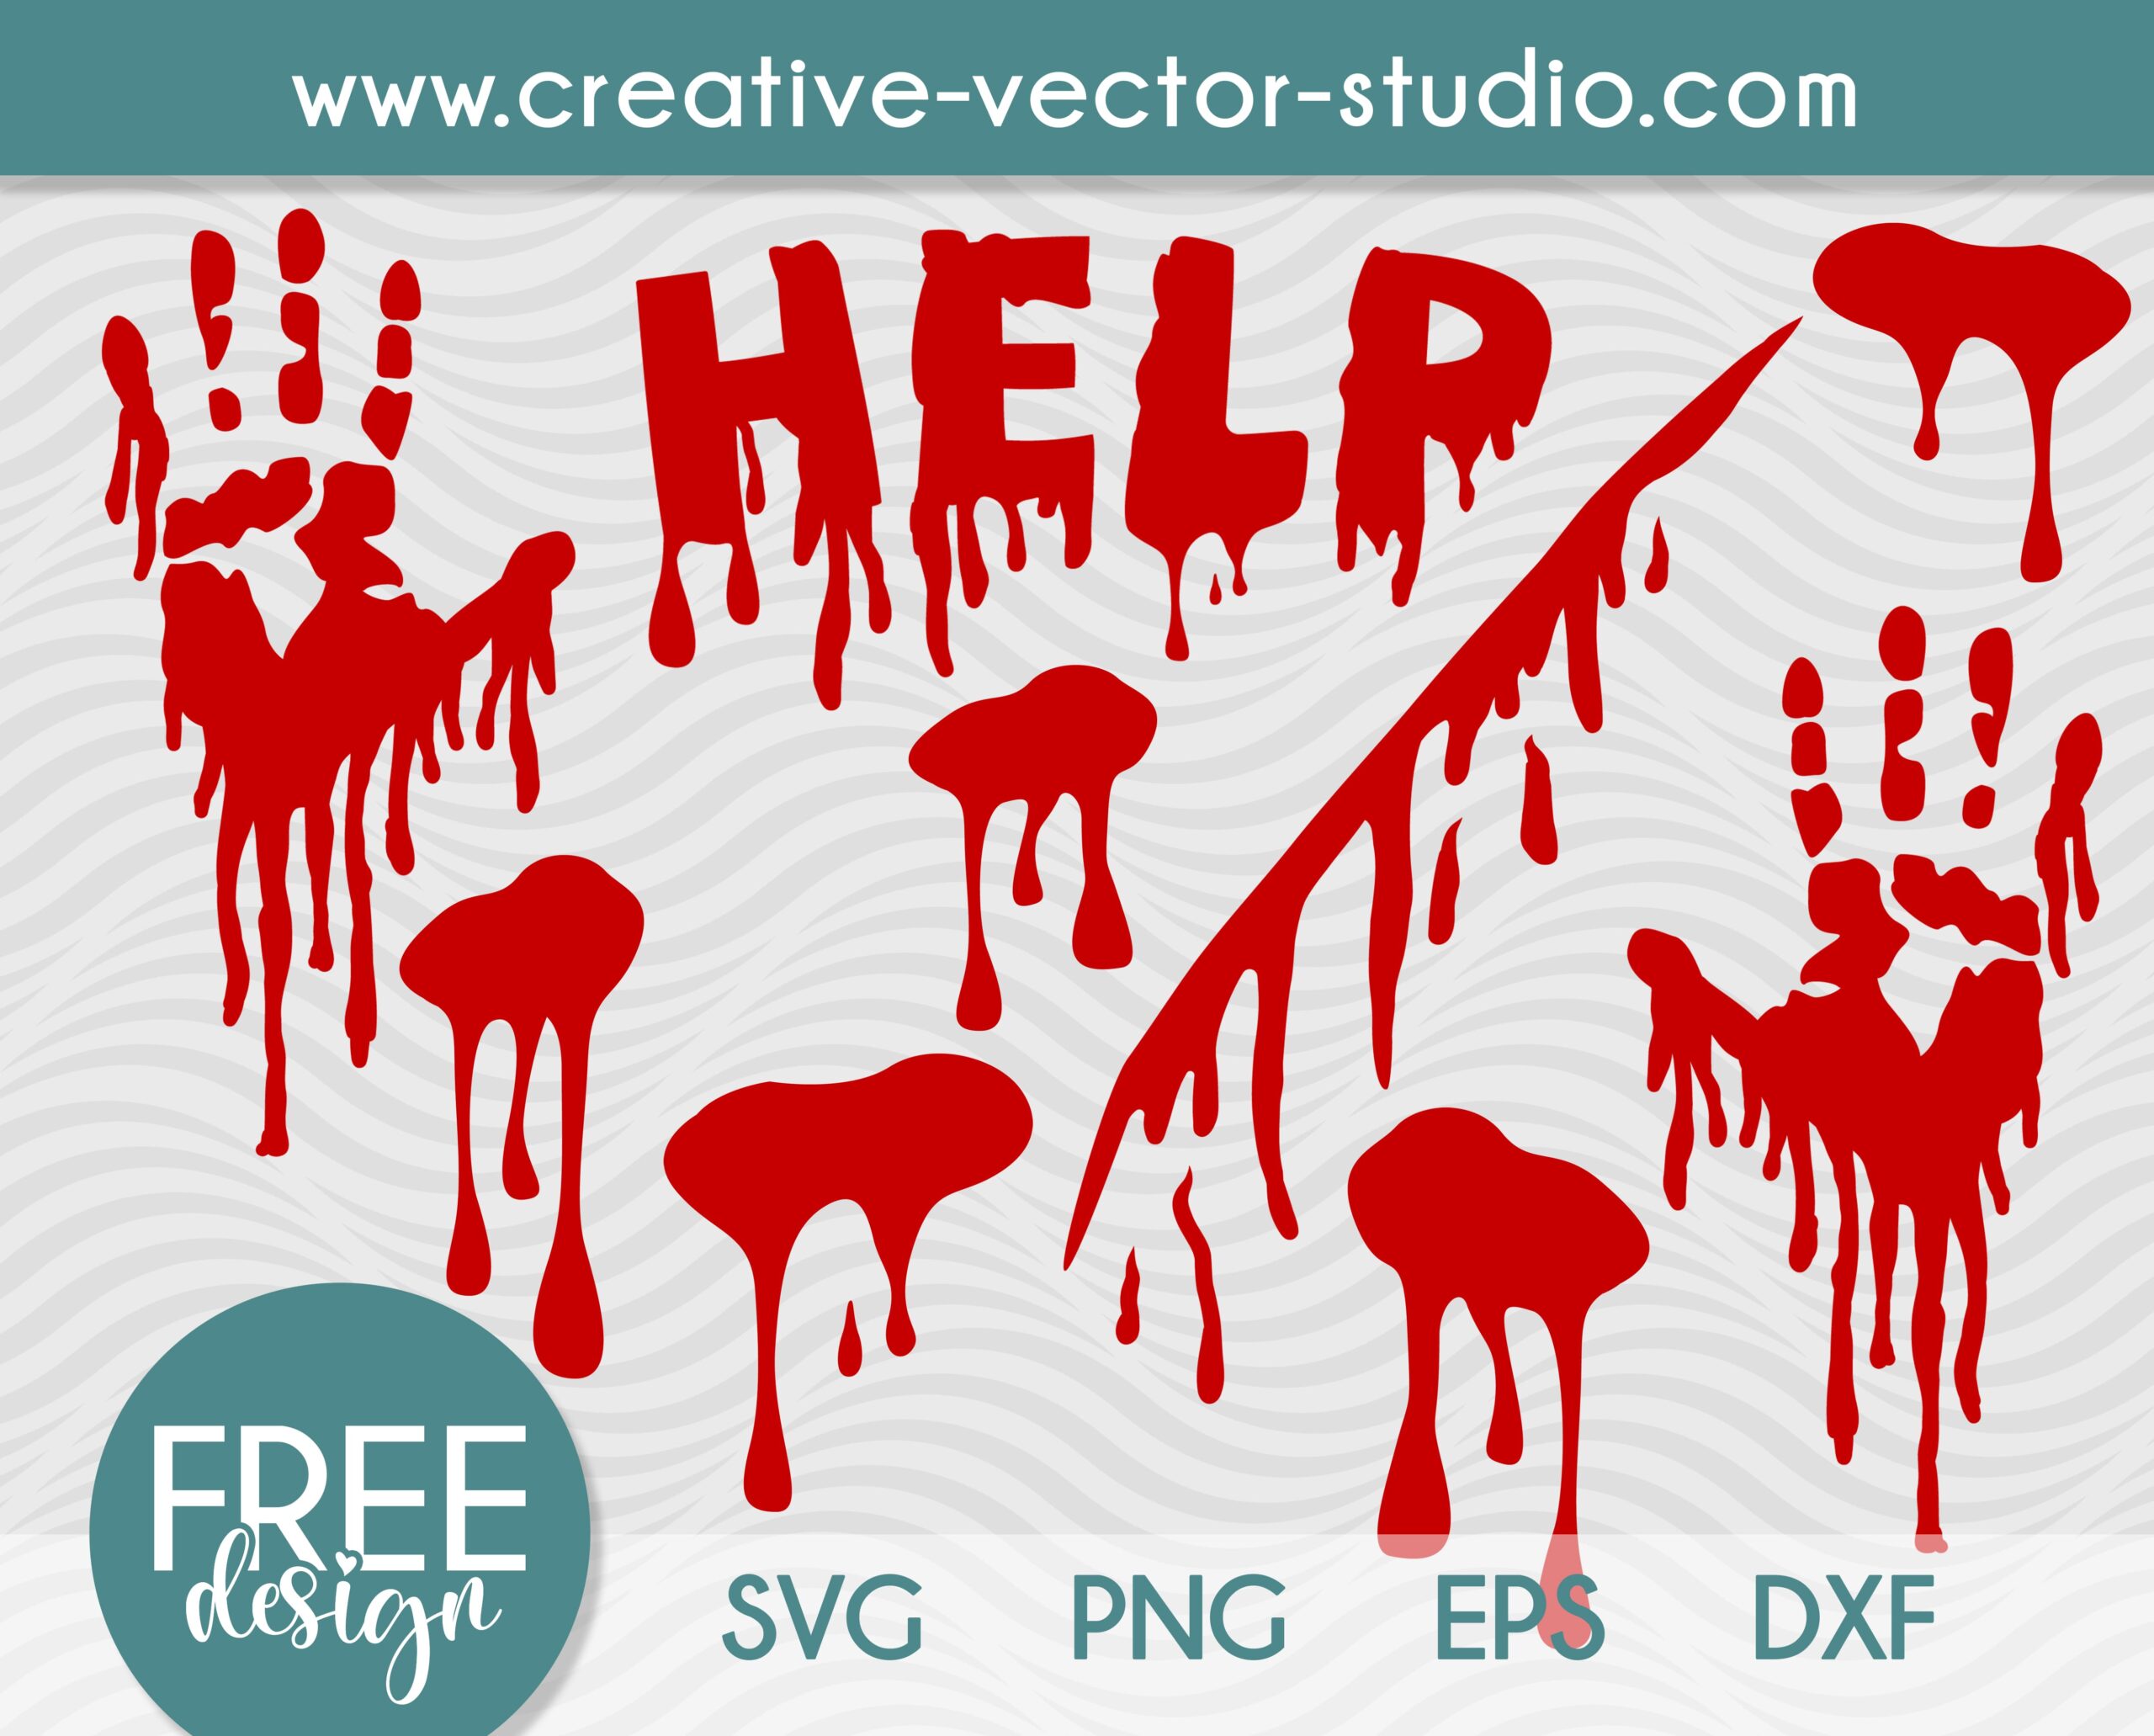 FREE Dripping SVG - Craft House SVG